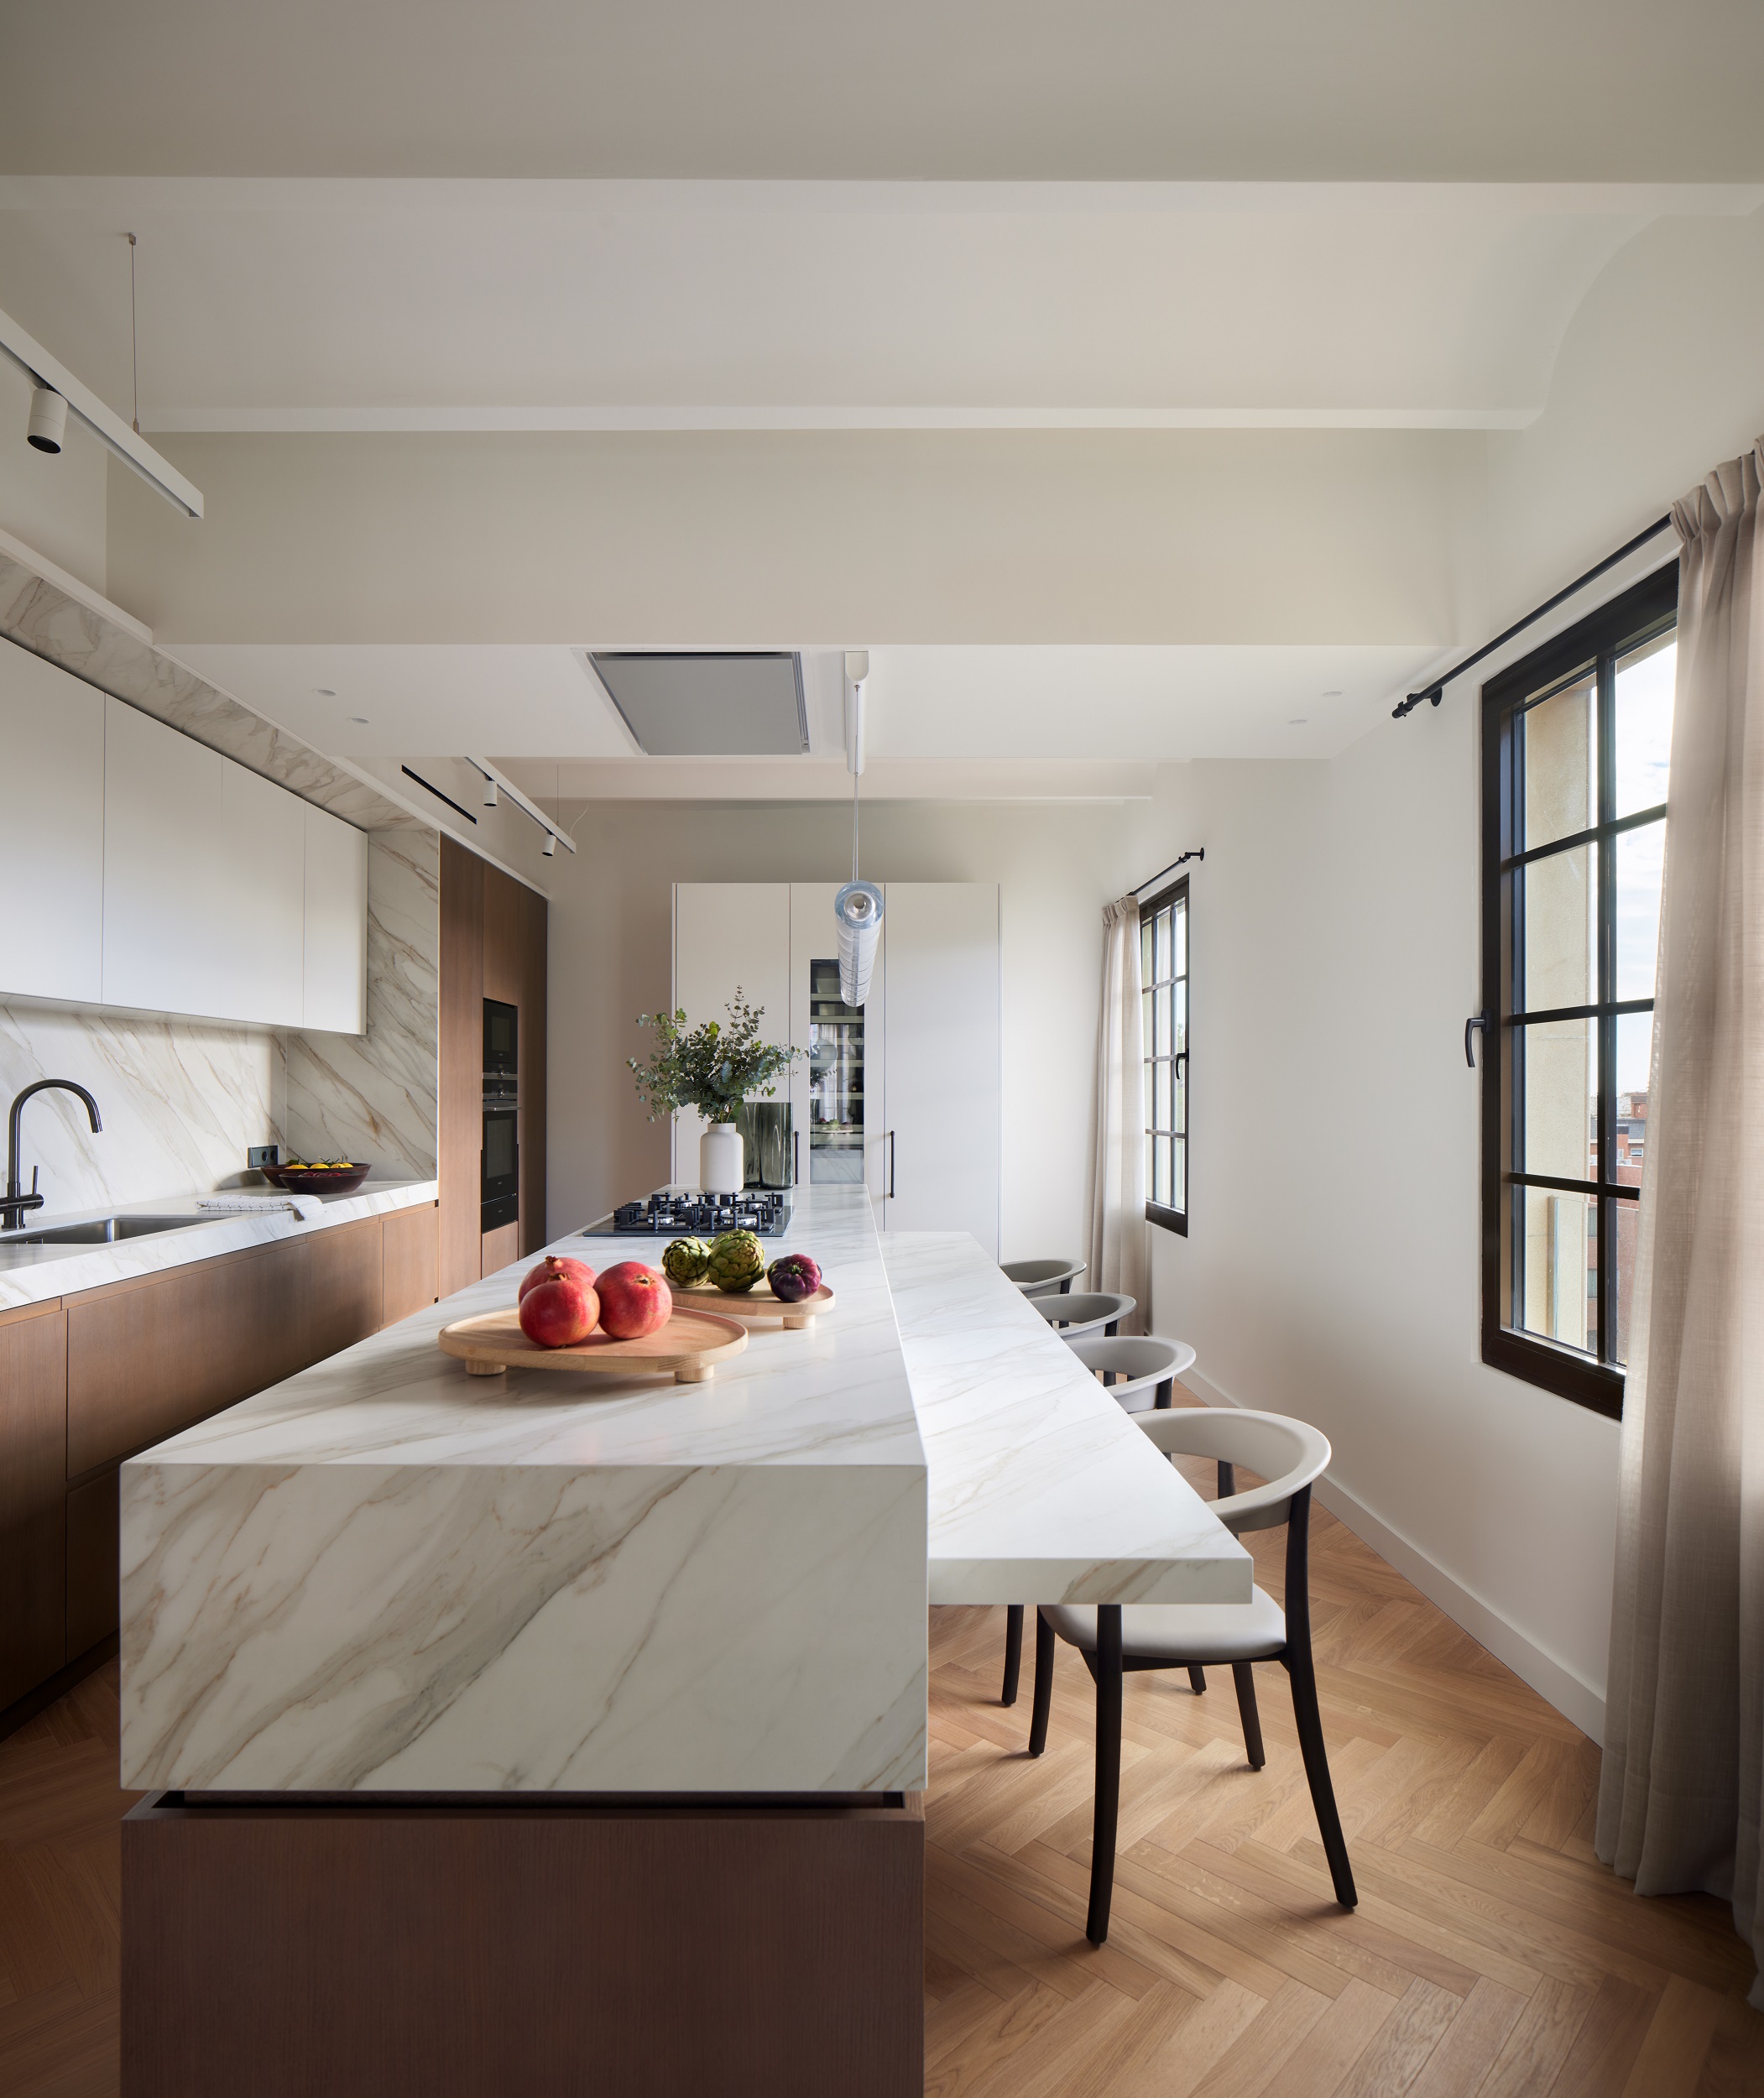 Pedralbes AV. Penthouse LUV Studio Kitchen 2 - LUV Studio - Architecture et design - Barcelone